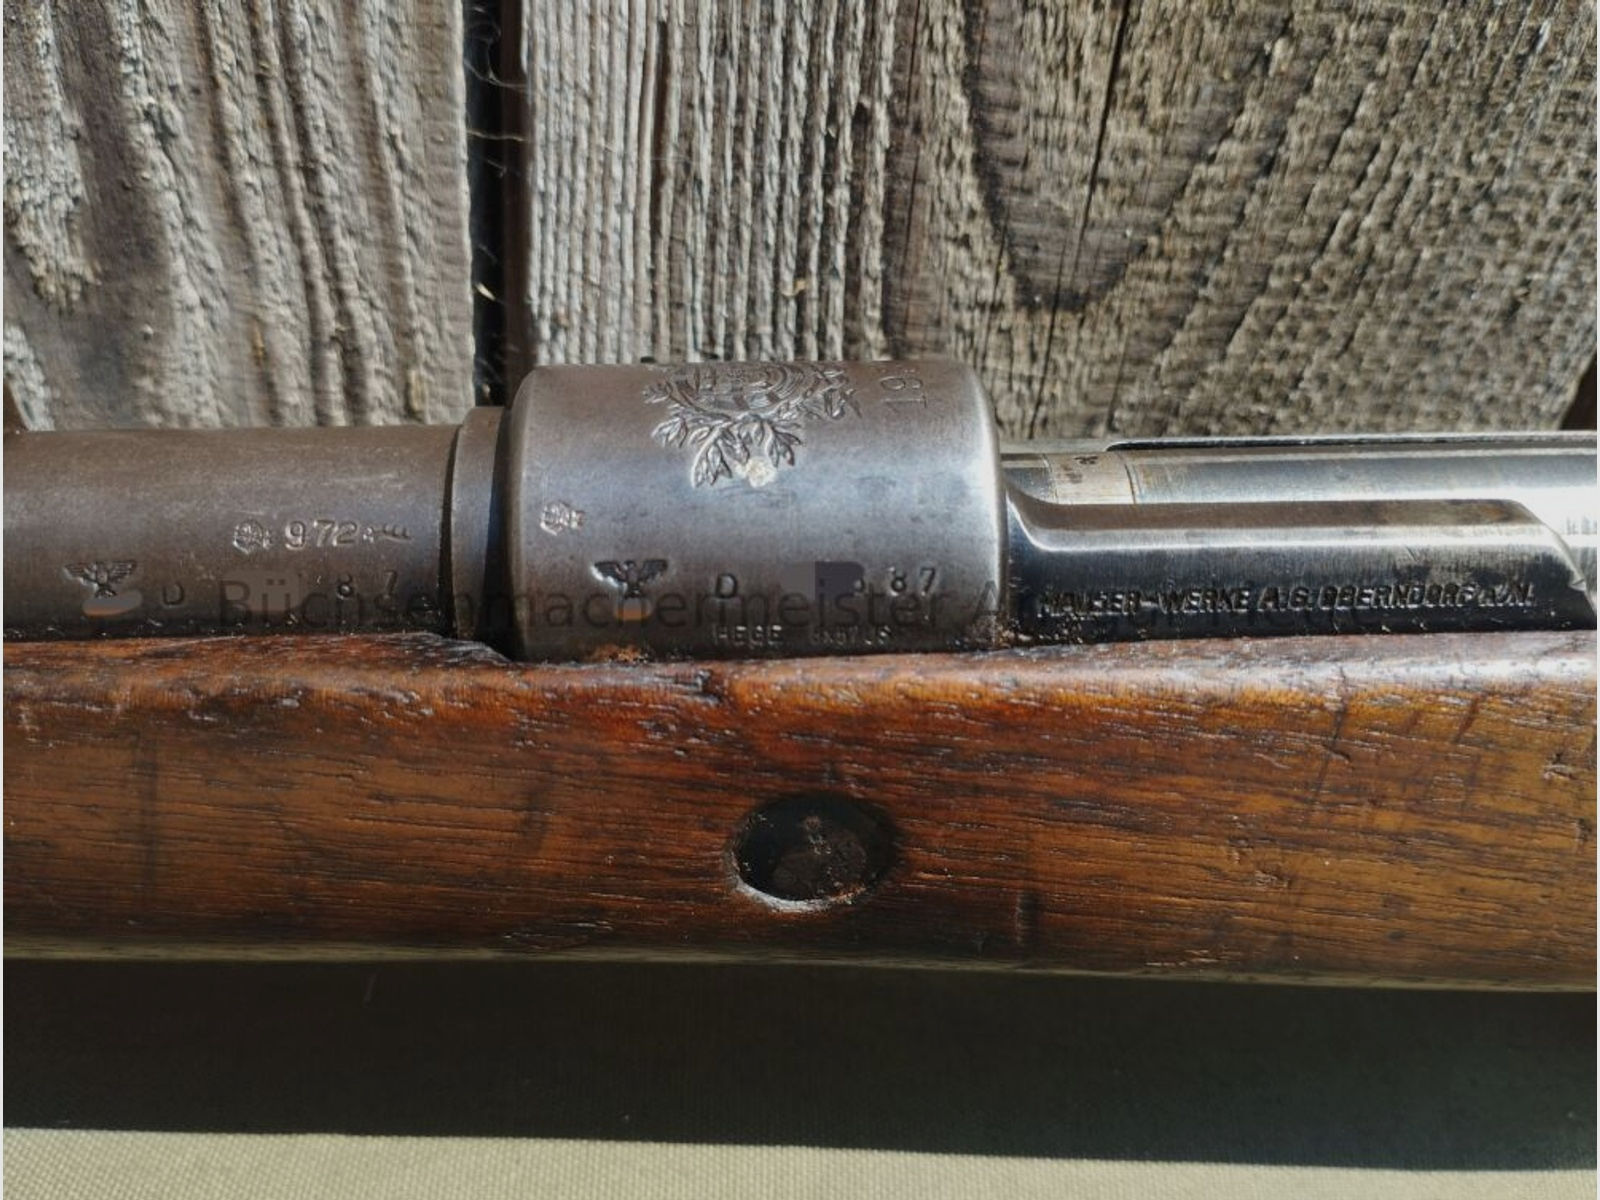 Mauser Mod 98 Portugal 1937 nummerngleich incl. Bajonett!	 98 Portugal 1937